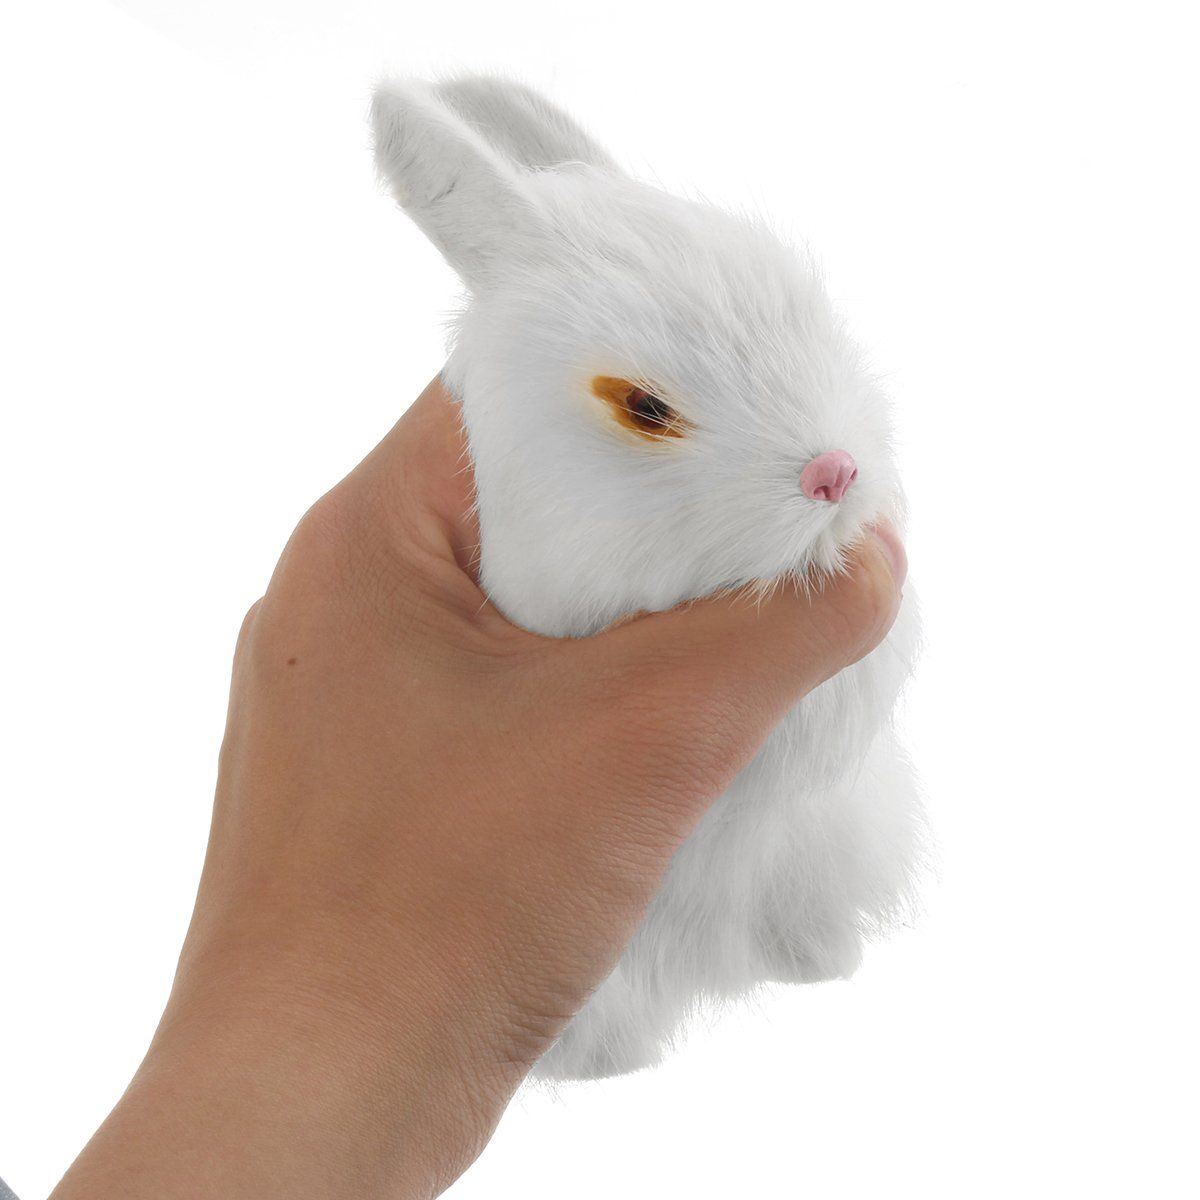 GrayYellowBrownWhite-Rabbits-Handmade-Easter-Bunnies-Home-Decorations-Desktop-Ornament-1452976-9